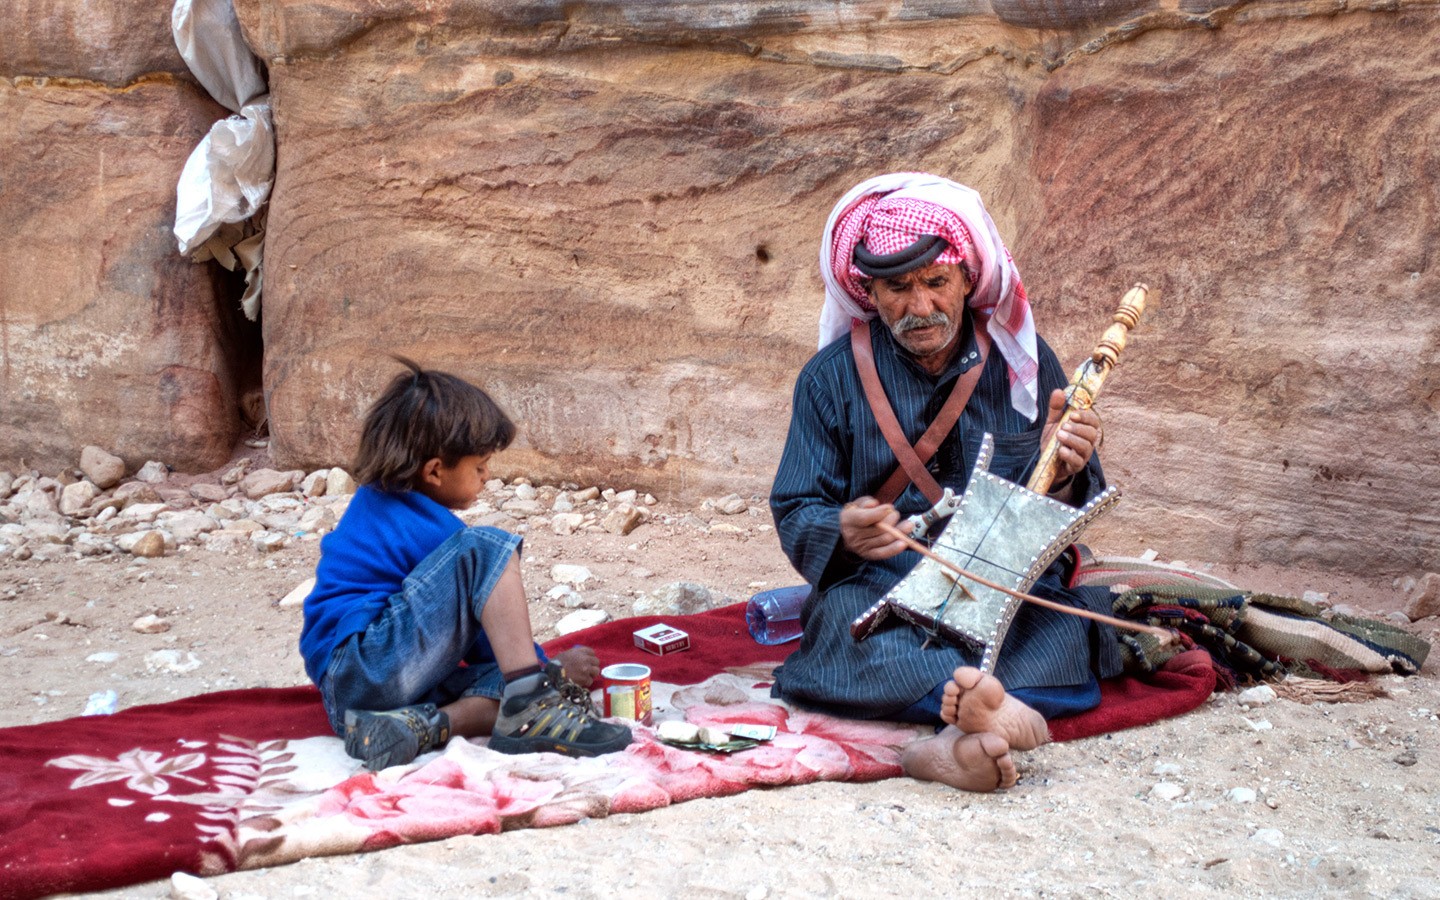 Bedouin musician playing a rebab in Jordan